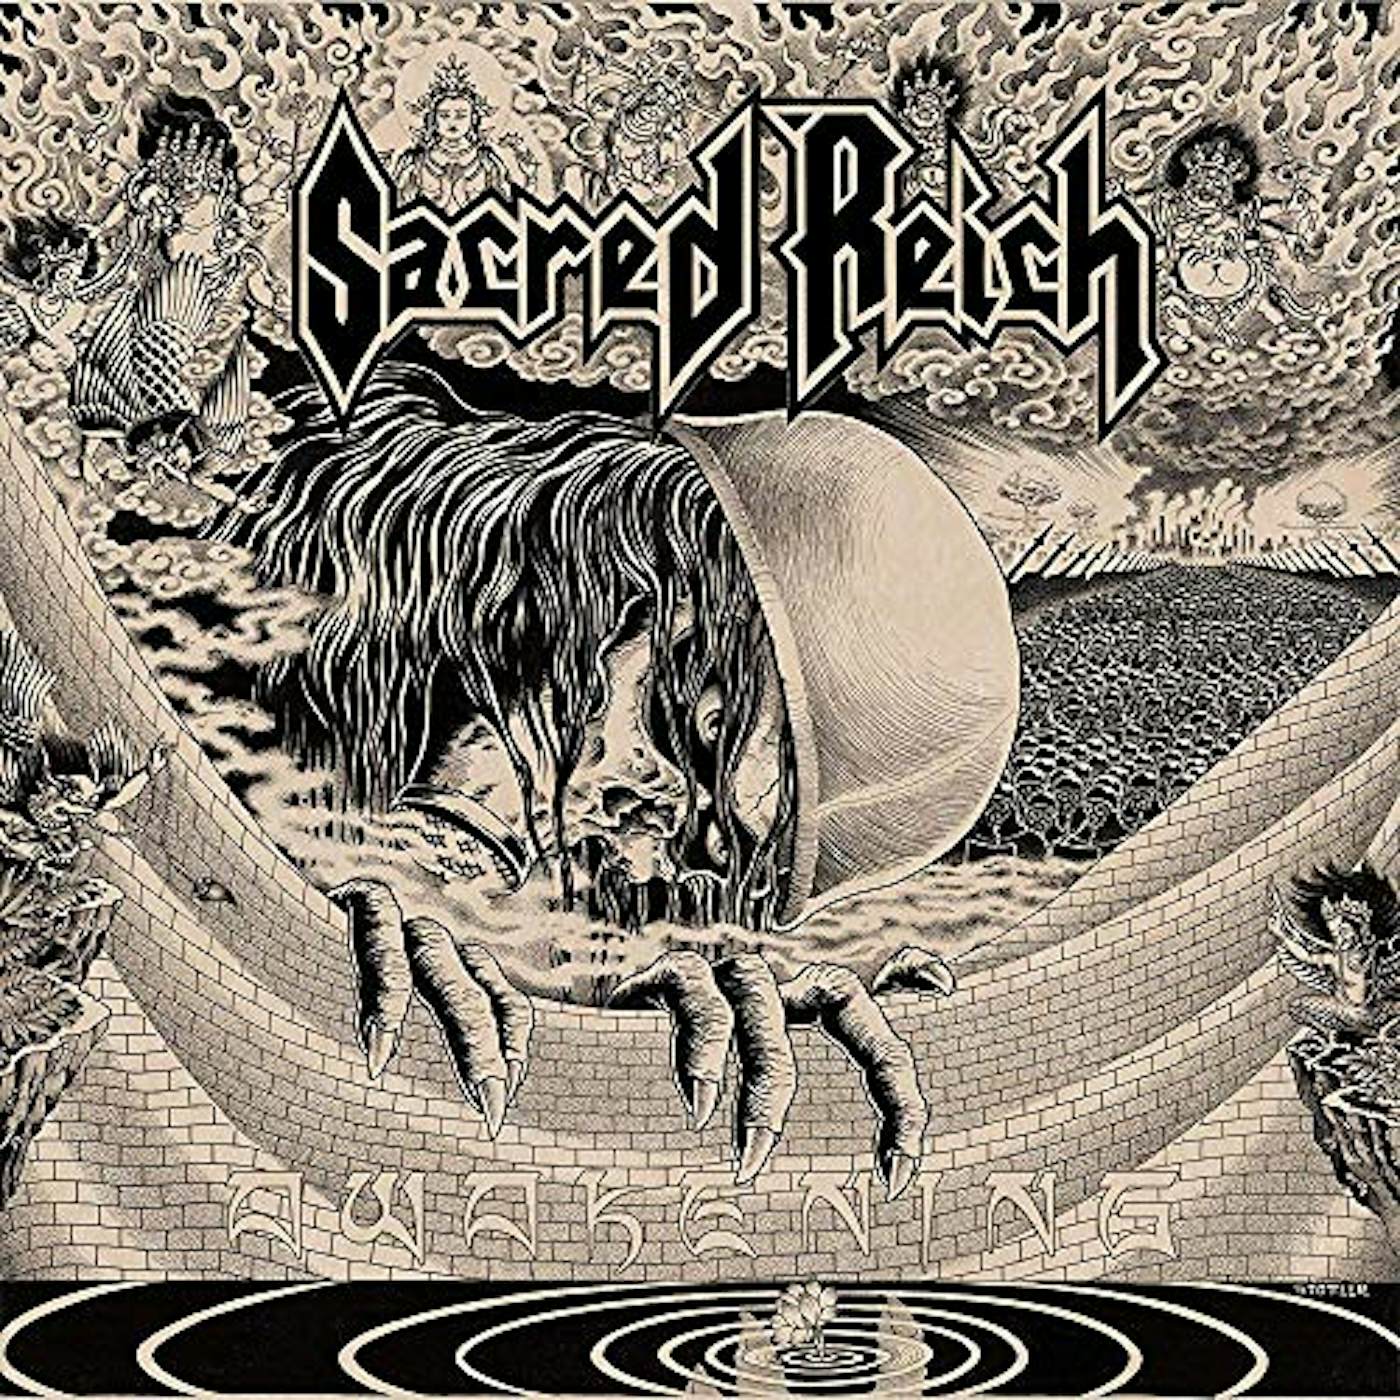 Sacred Reich Awakening Vinyl Record